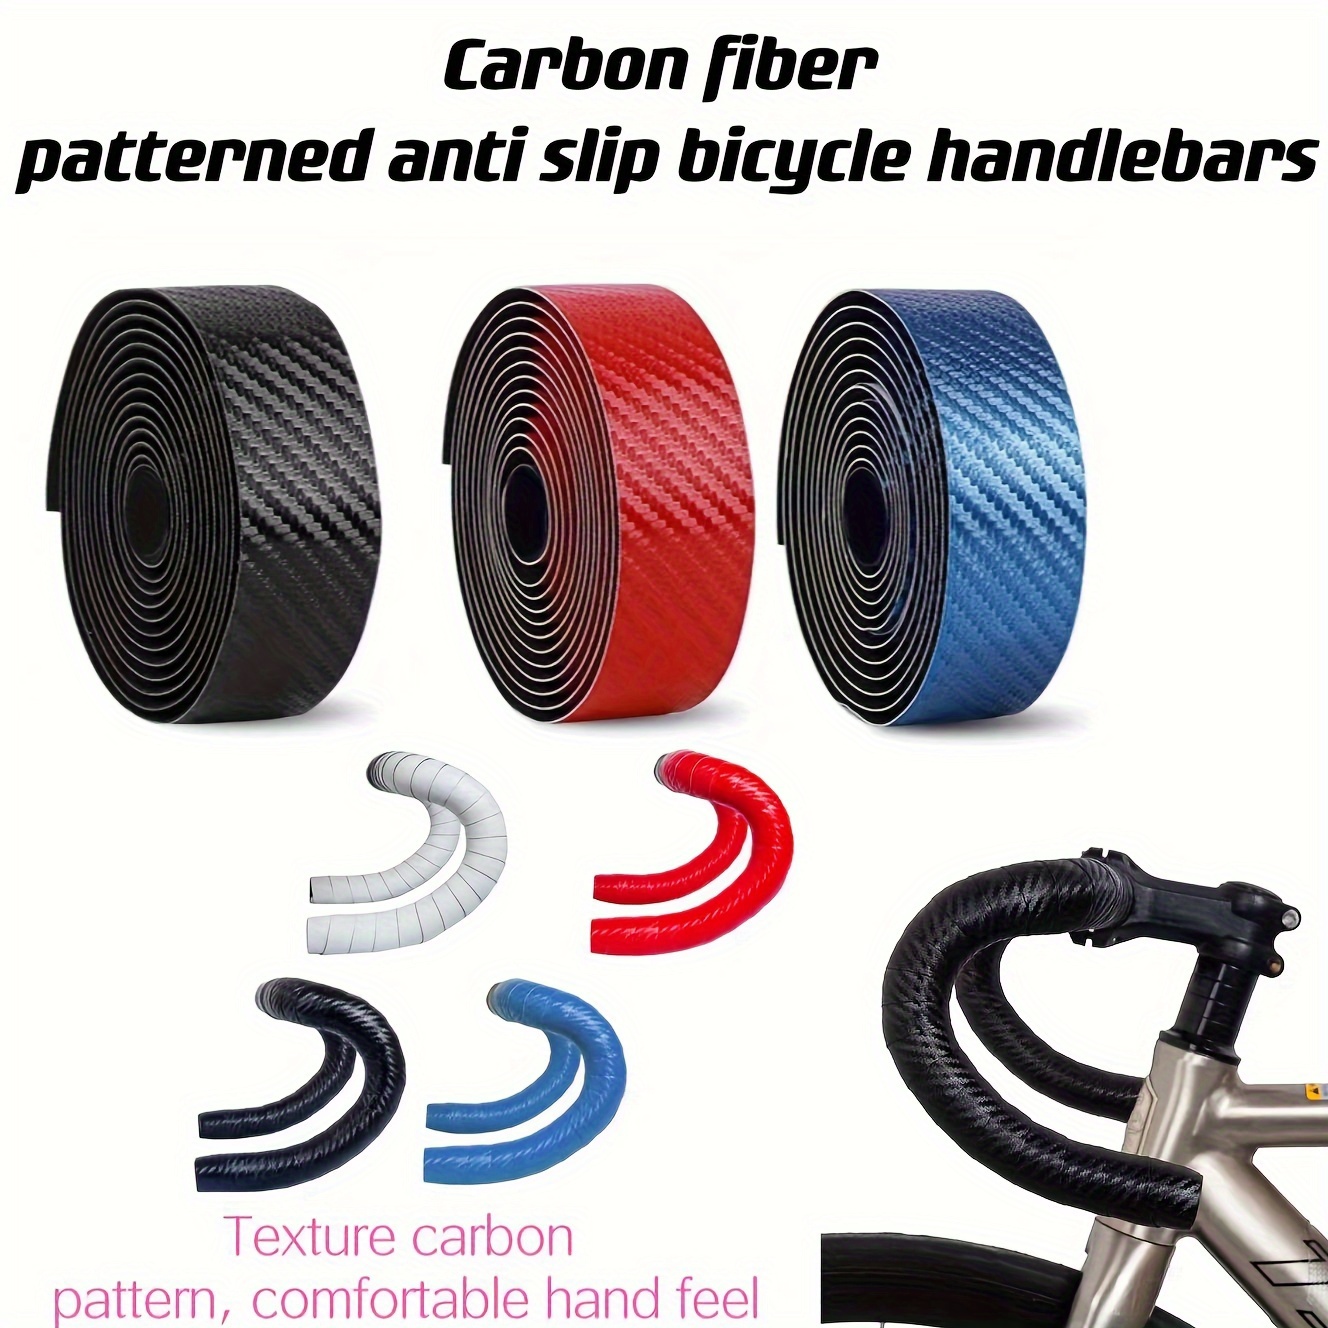 

Premium Carbon Fiber Bike Handlebar Tape - Anti-slip, Shock-absorbing Pu Leather For Road & Mountain Bikes